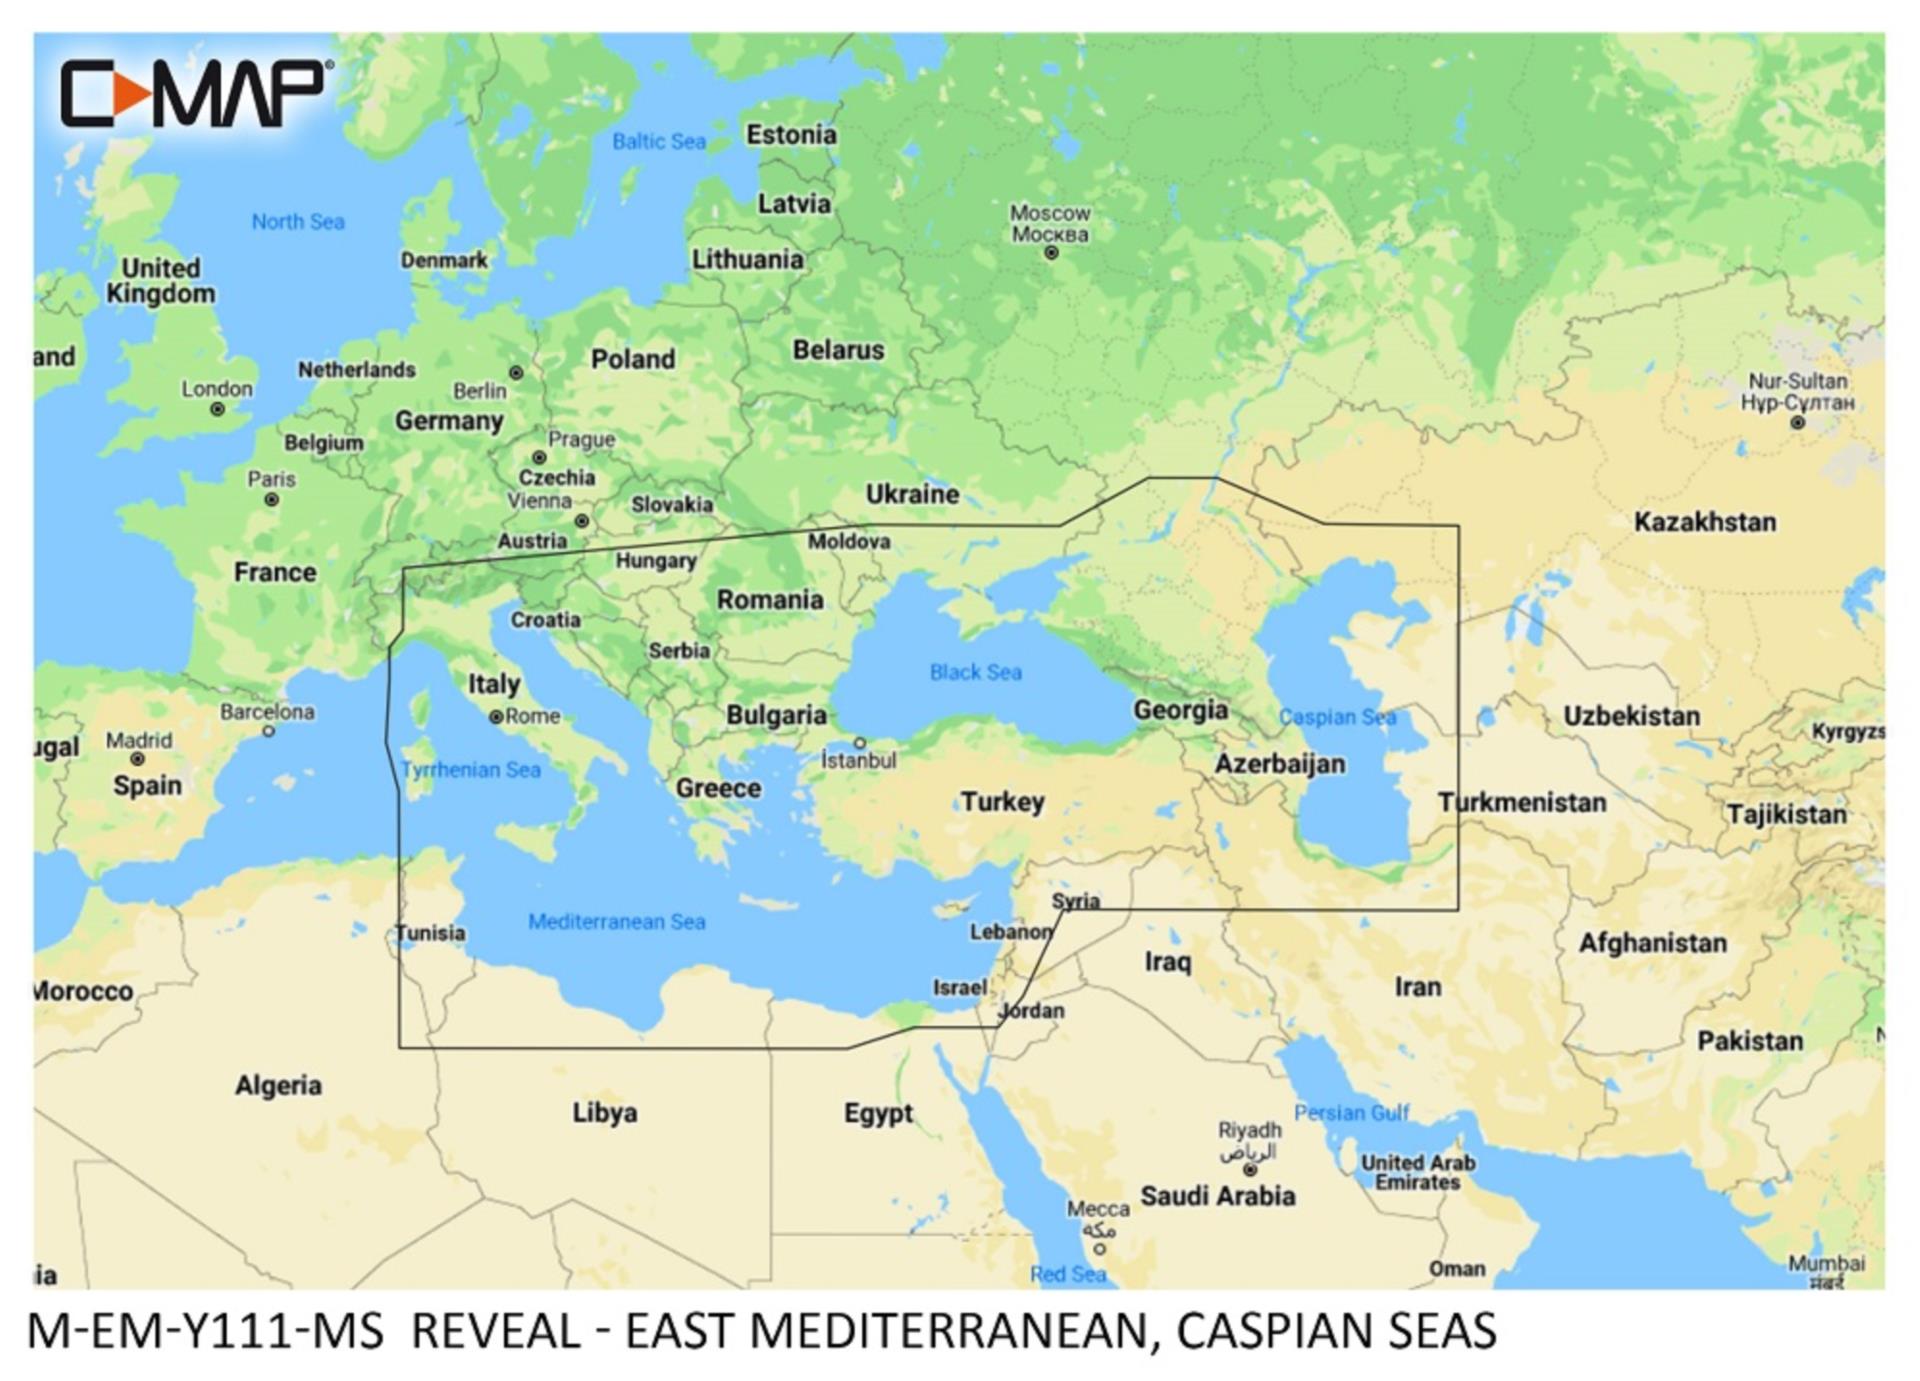 C-MAP Reveal L East Mediterranean, Caspian Seas